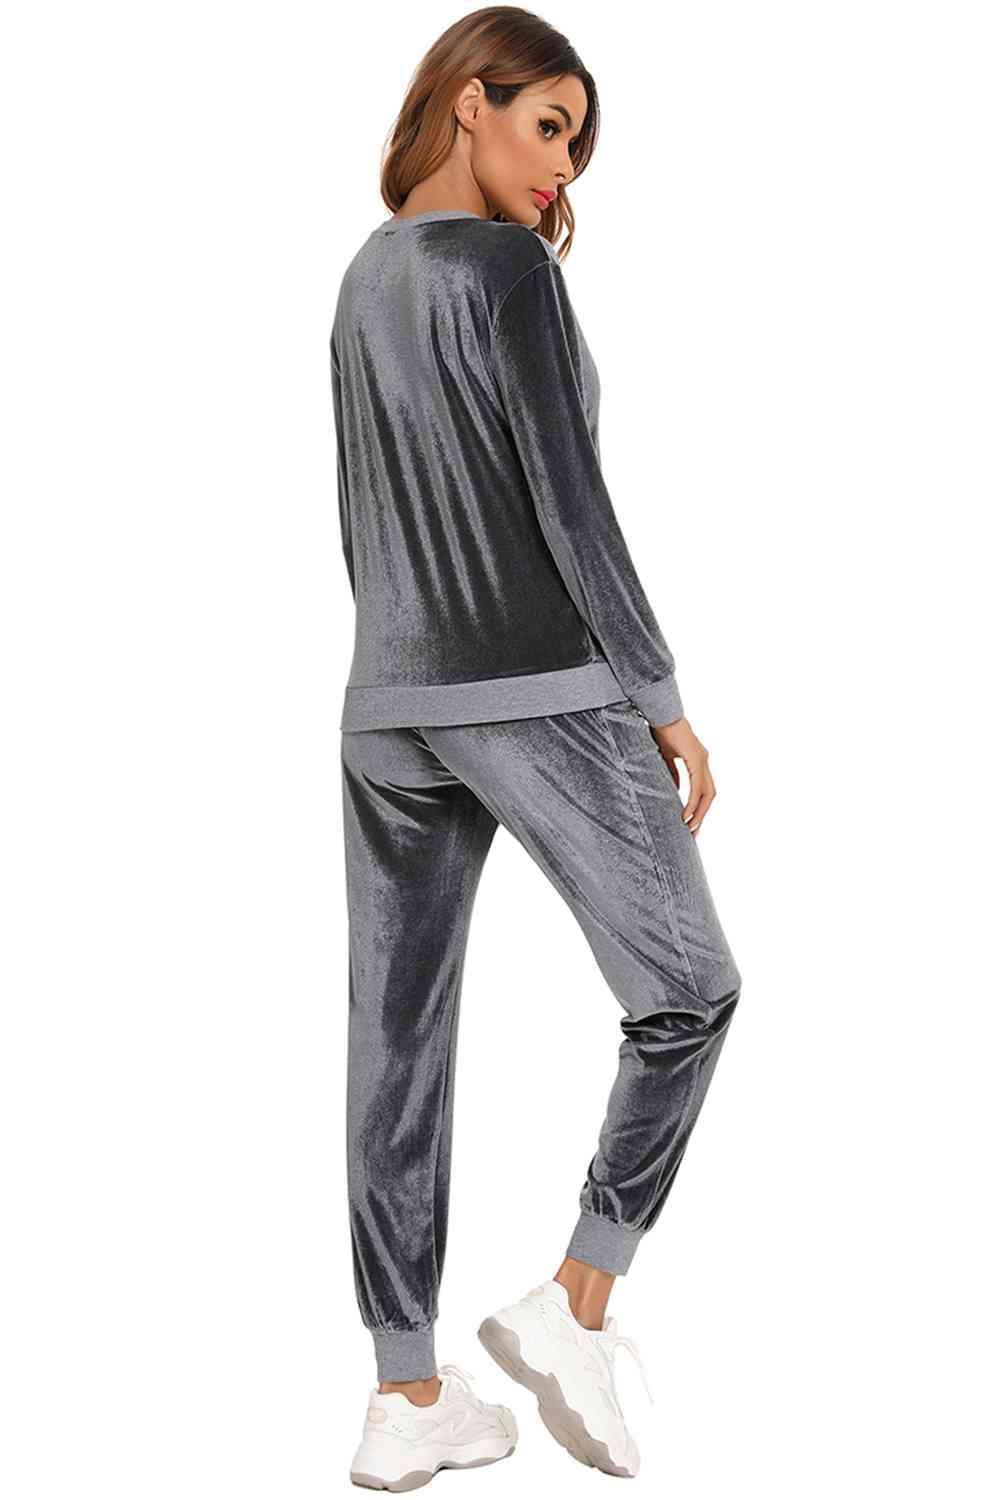 Comfy Long Sleeve Top and Pants Loungewear Set - MXSTUDIO.COM